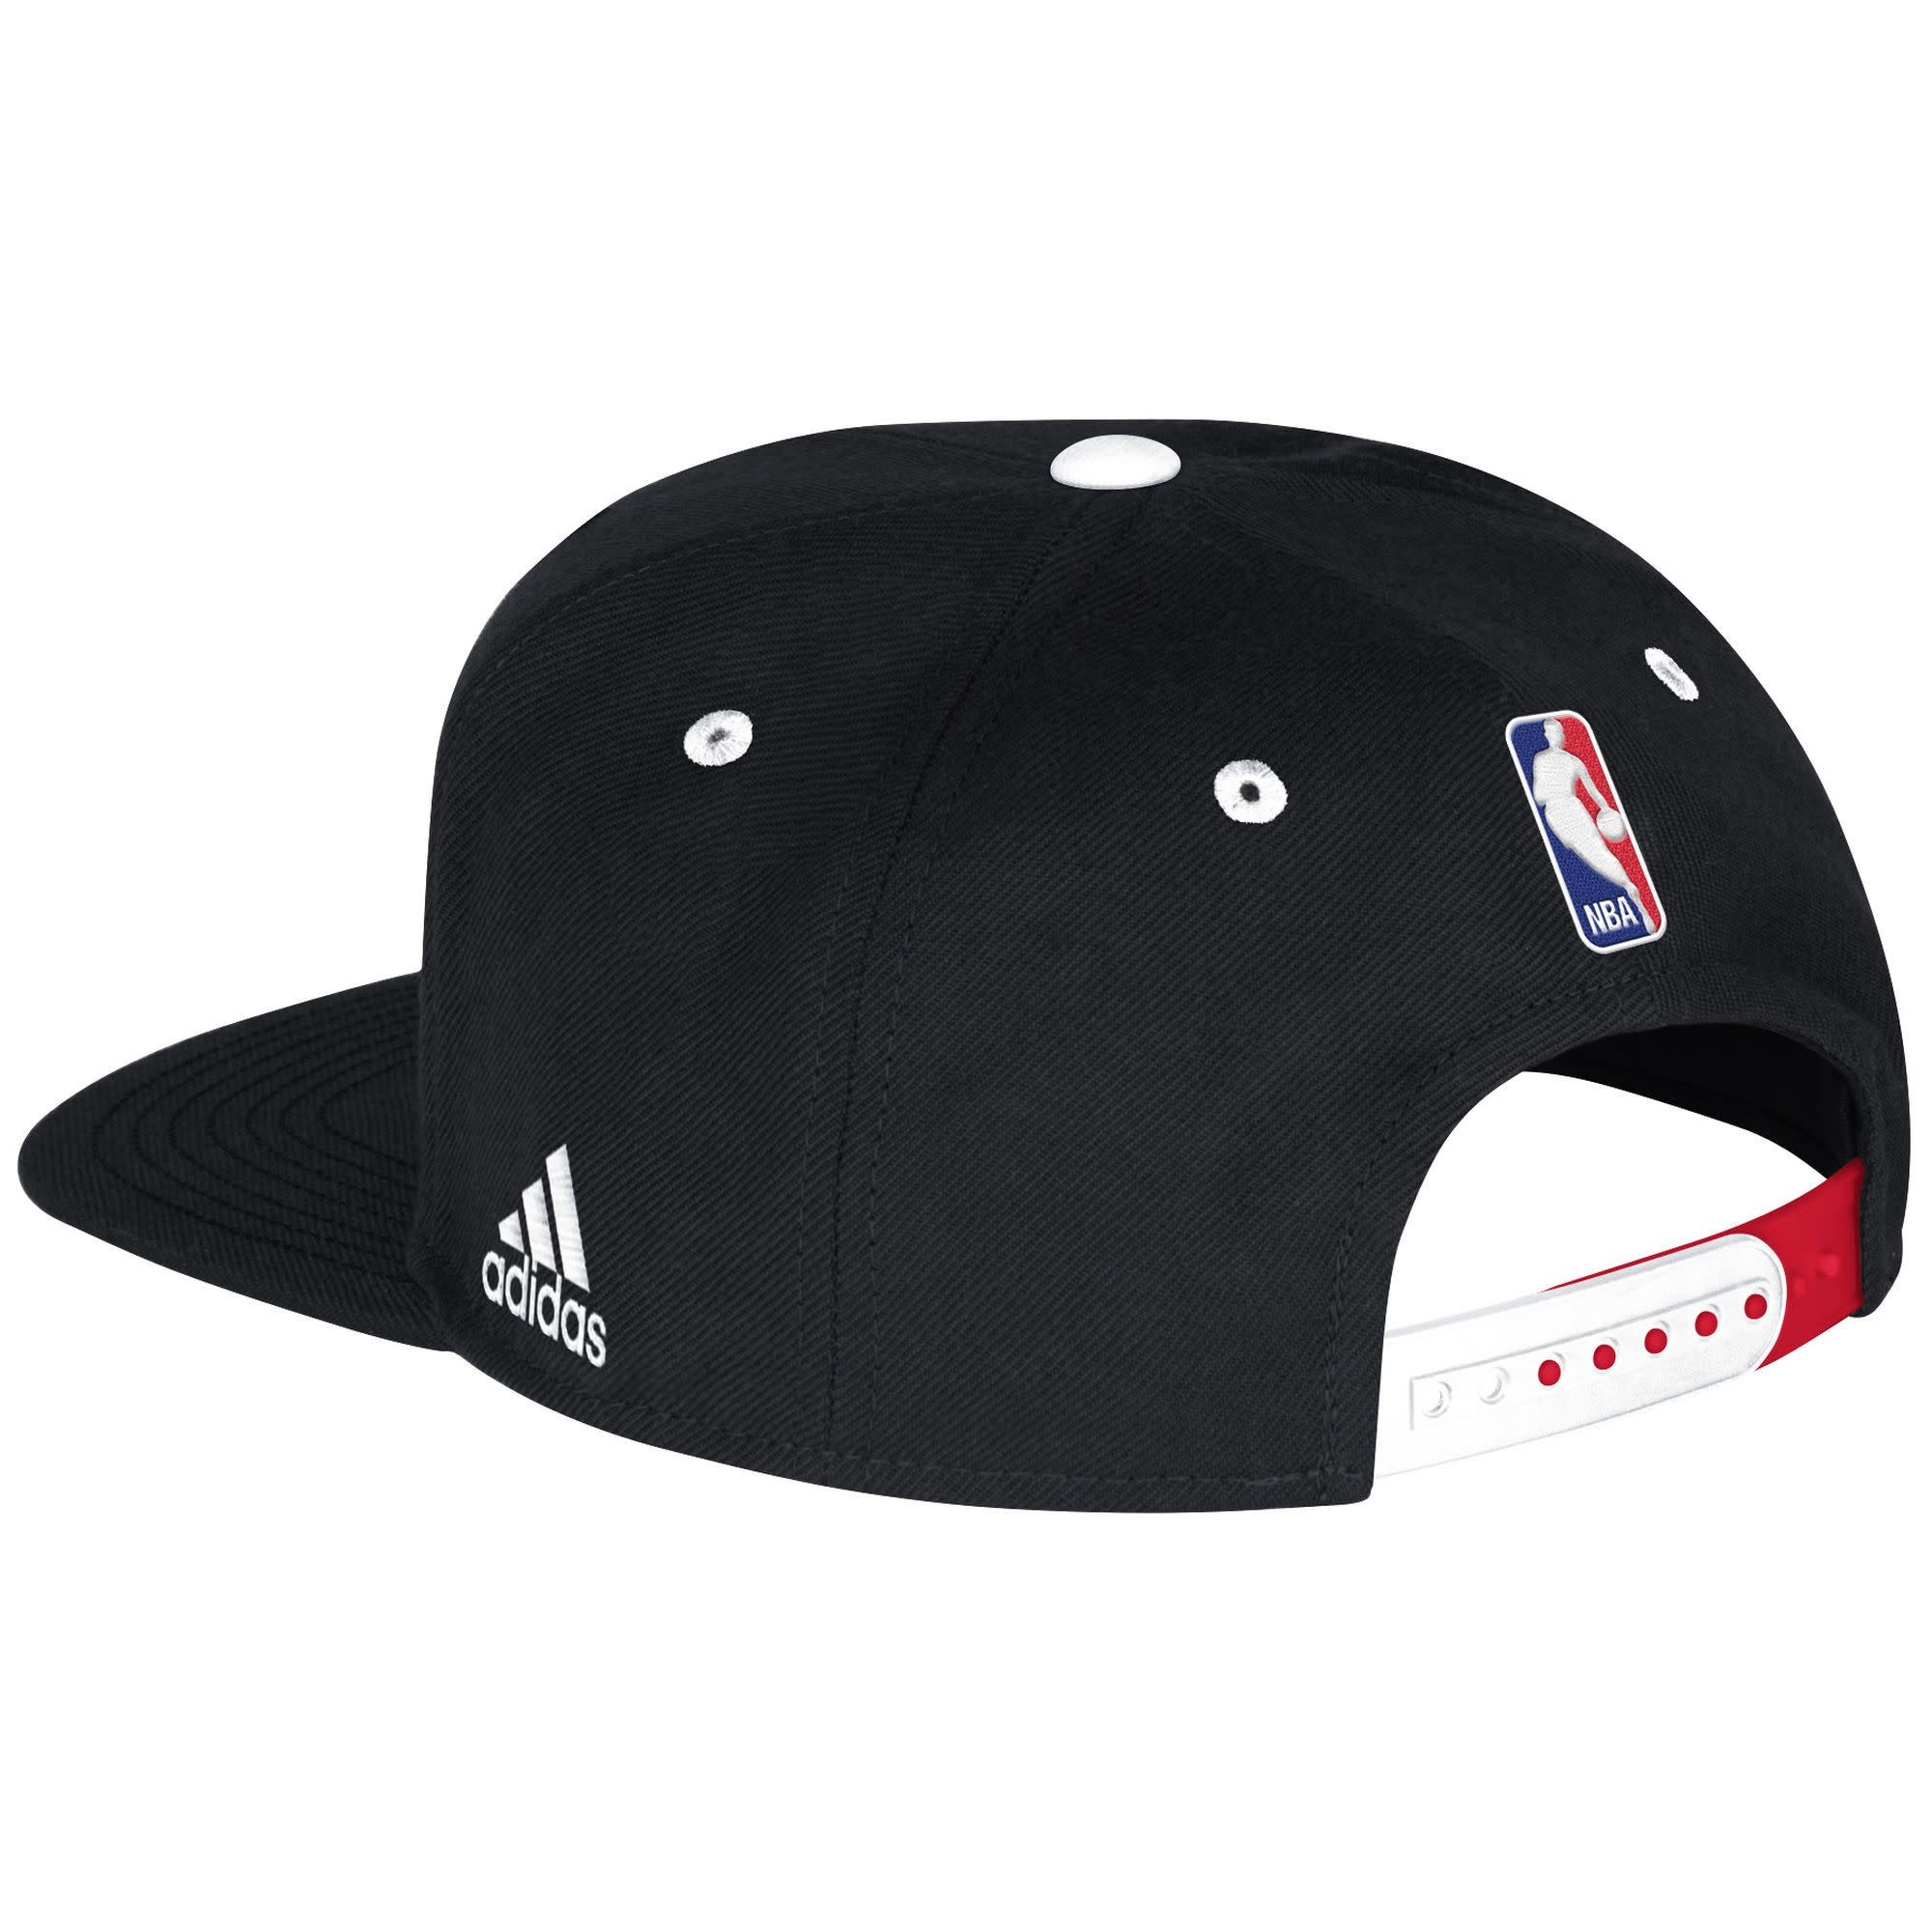 Miami Heat Adidas 2014 Draft Snapback Black - The Room of Downey